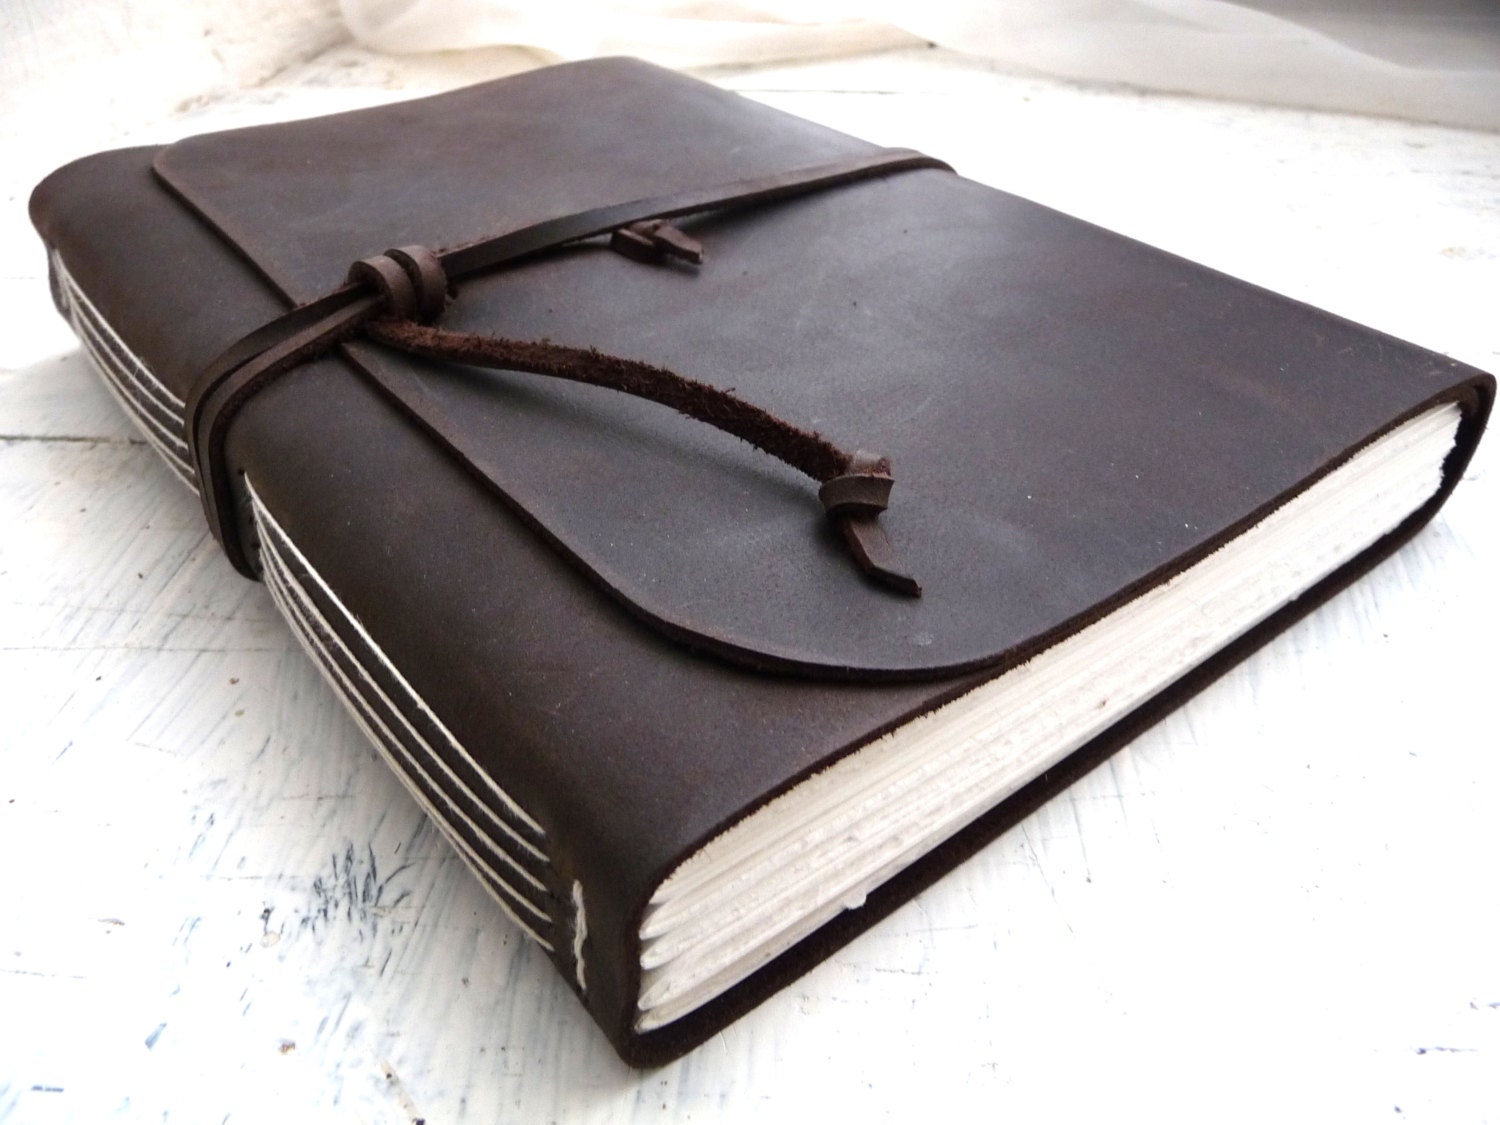 Large Leather journal or sketchbook measures 16cm by 21.5cm